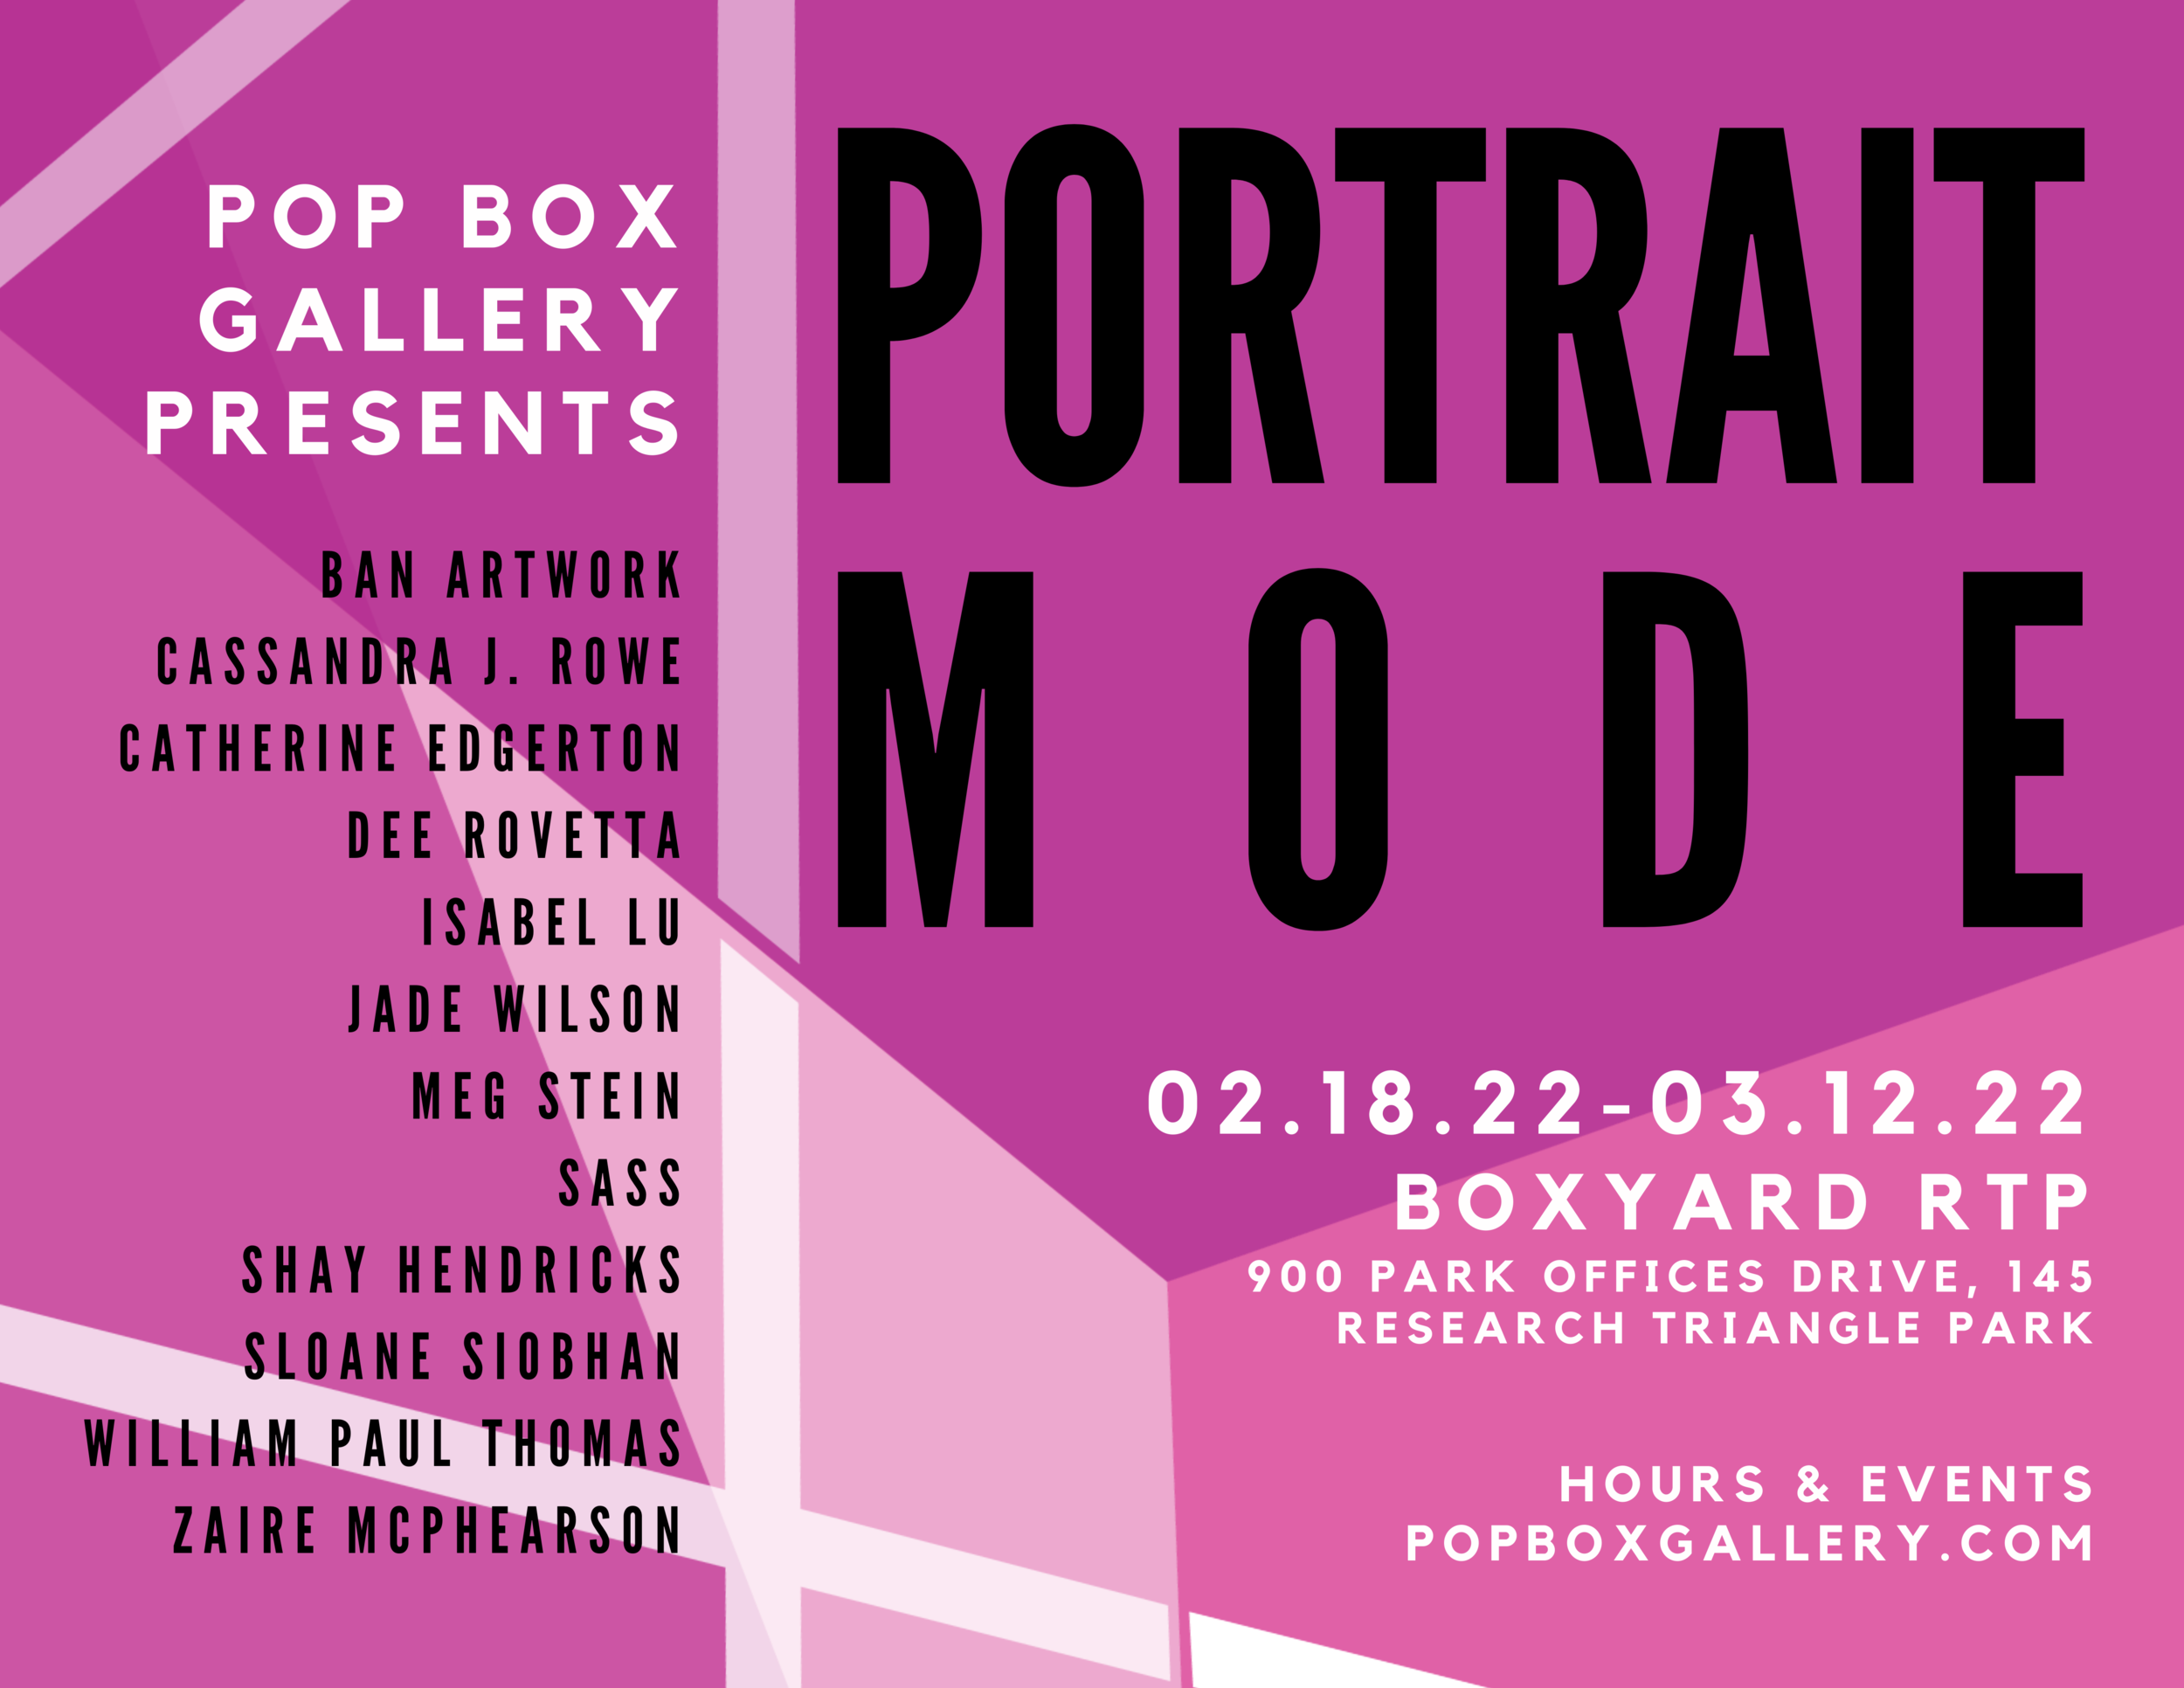 Pop Box Gallery